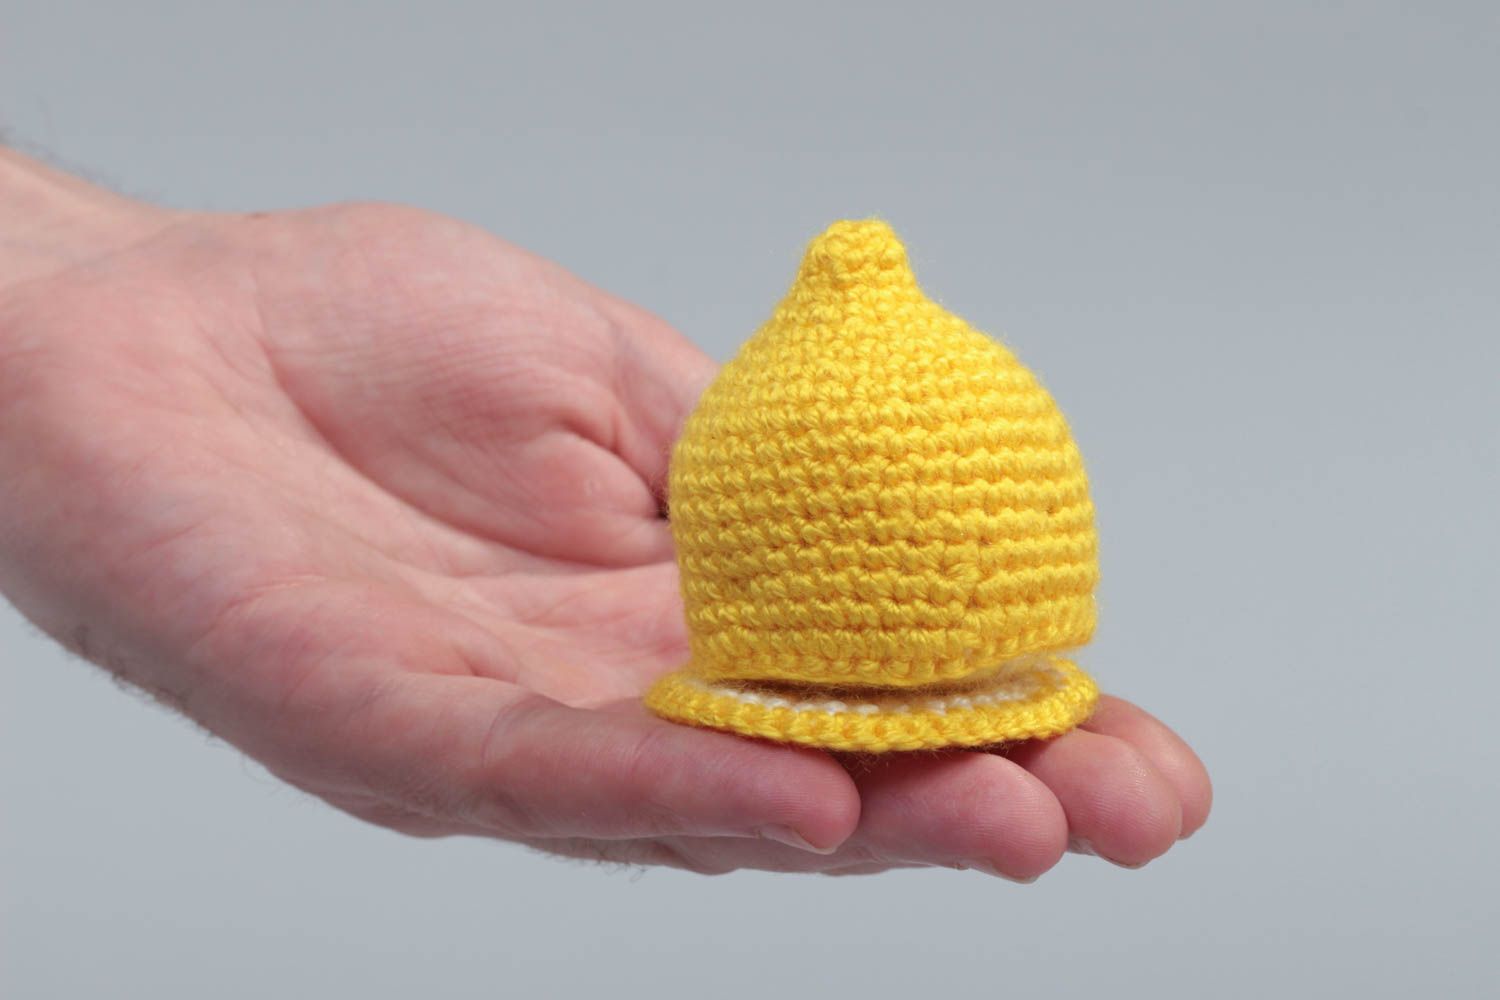 Handmade soft toy lemon crocheted of acrylic threads for kids and interior decor photo 5